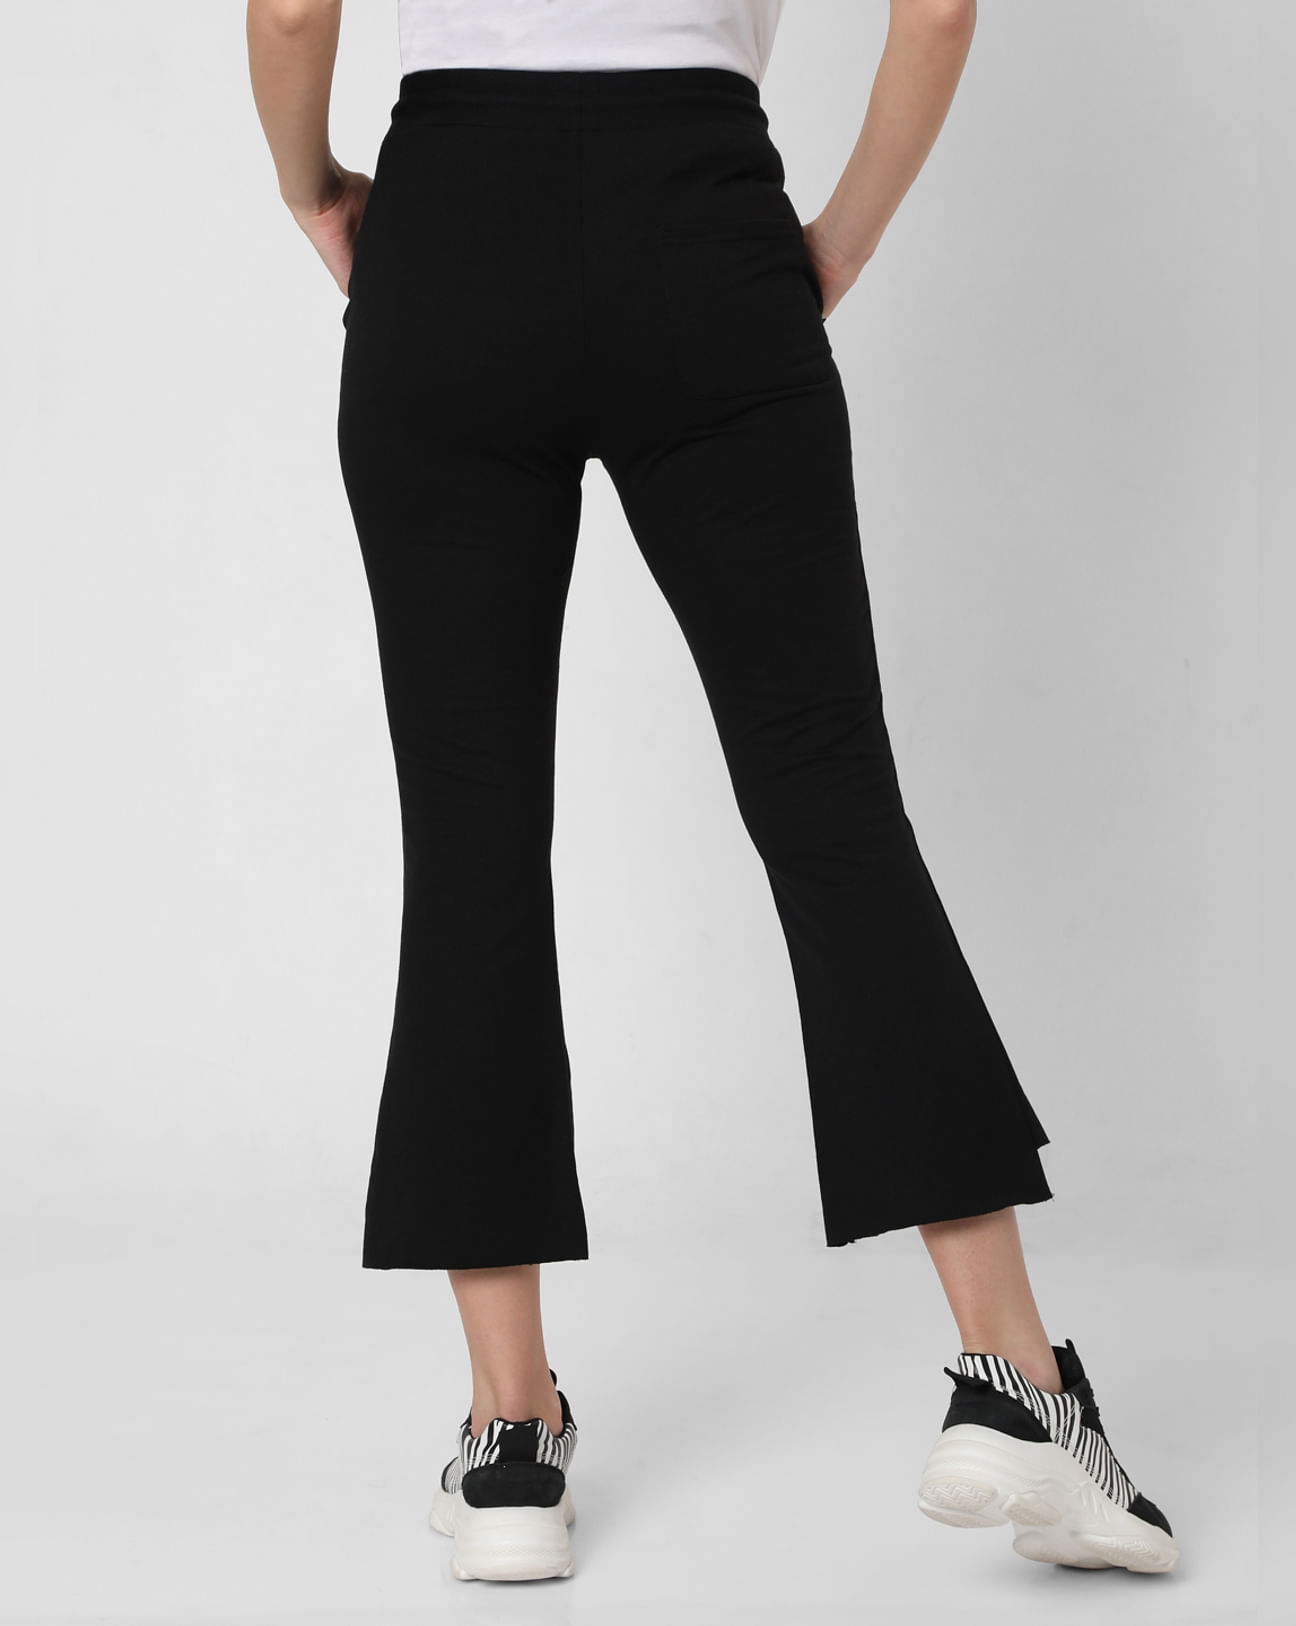 Black Lounge Pants - Buy Women's Black Flared Lounge Pants Online